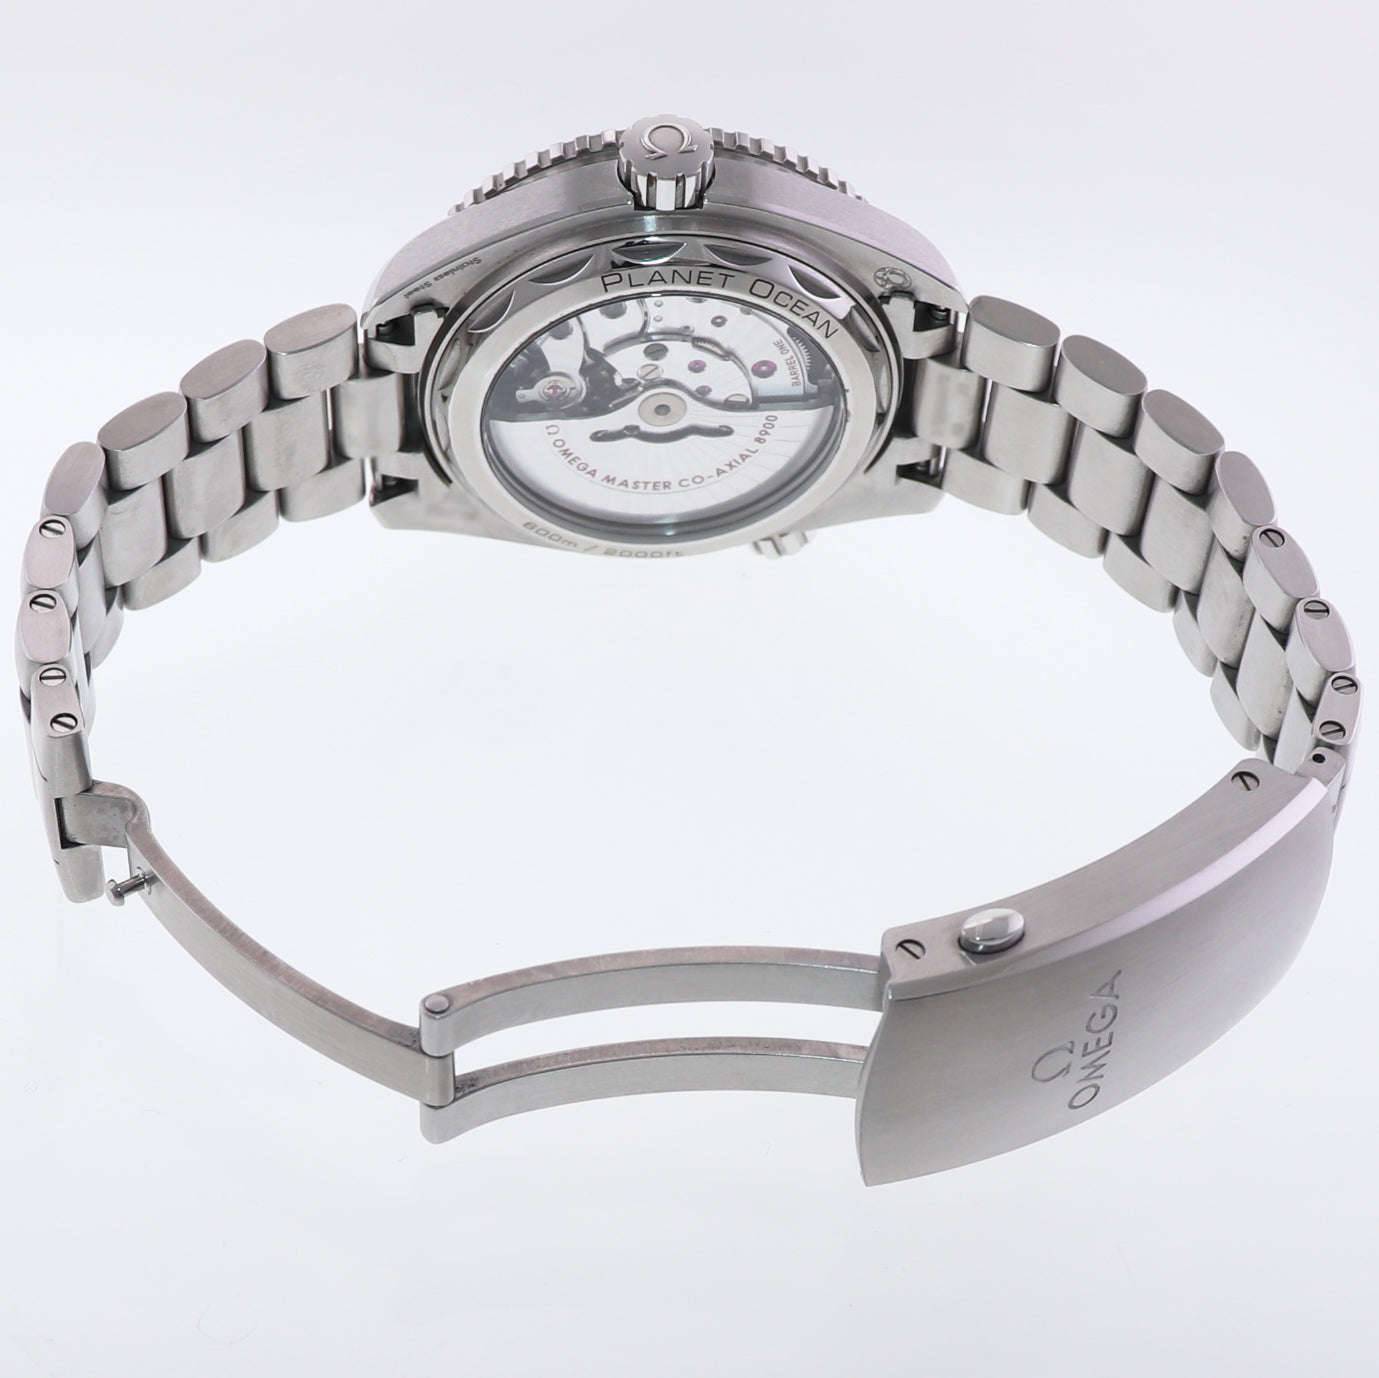 Omega Seamaster Planet Ocean 600M 215.30.44.21.01.002 Black 43.5mm Steel Watch